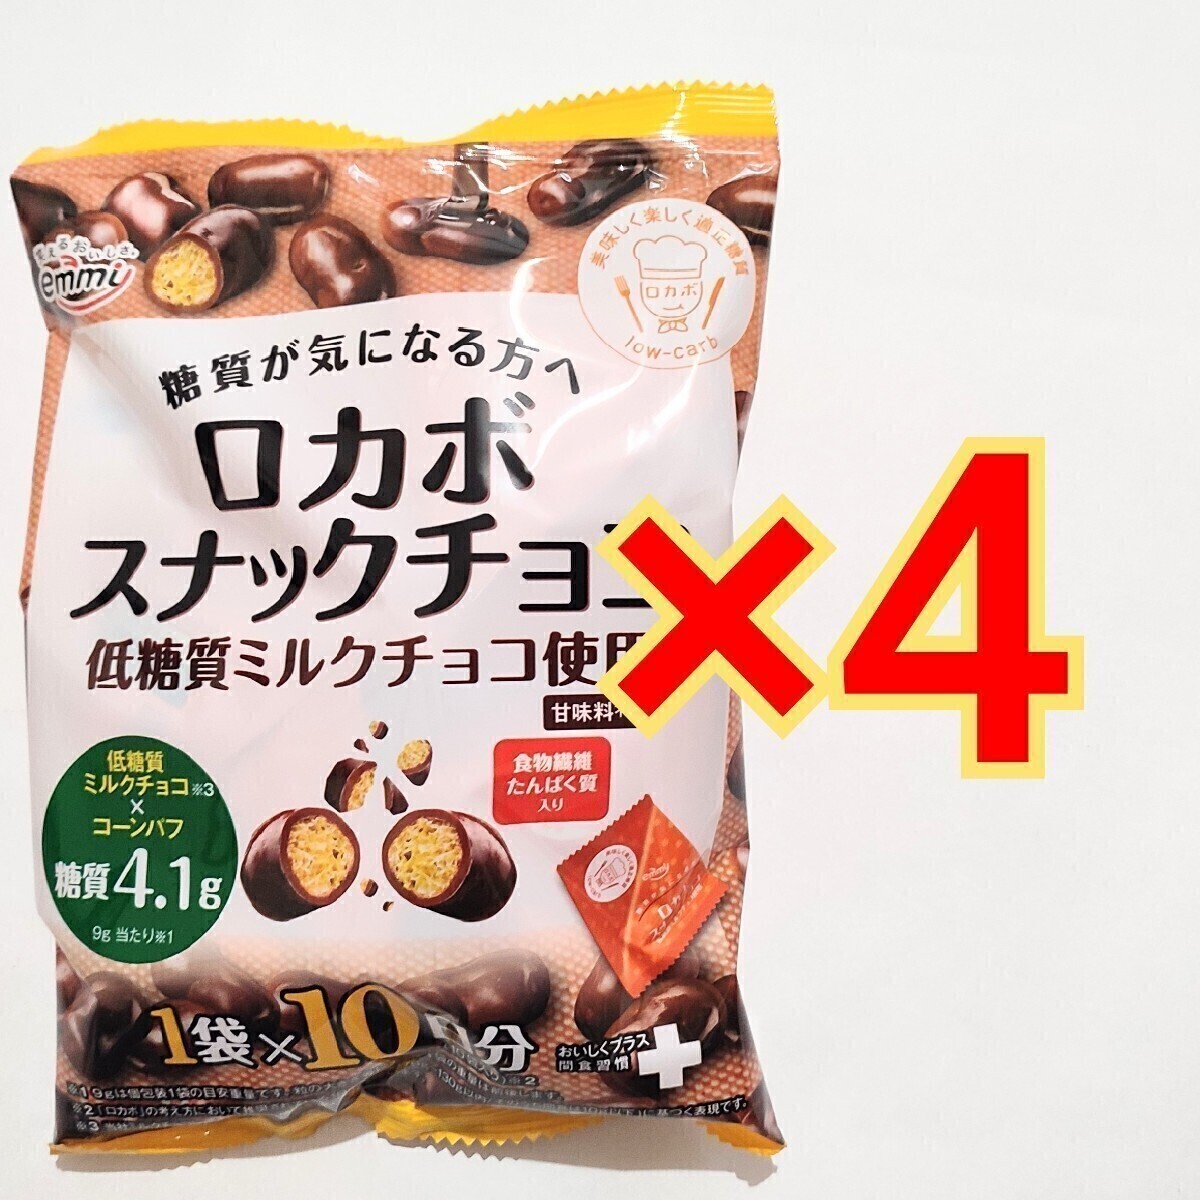 4 sack rokabo snack chocolate regular .telisi. puff low sugar quality protein quality diet emmyrokabo plus Clan chi chocolate mochi mugi chocolate 